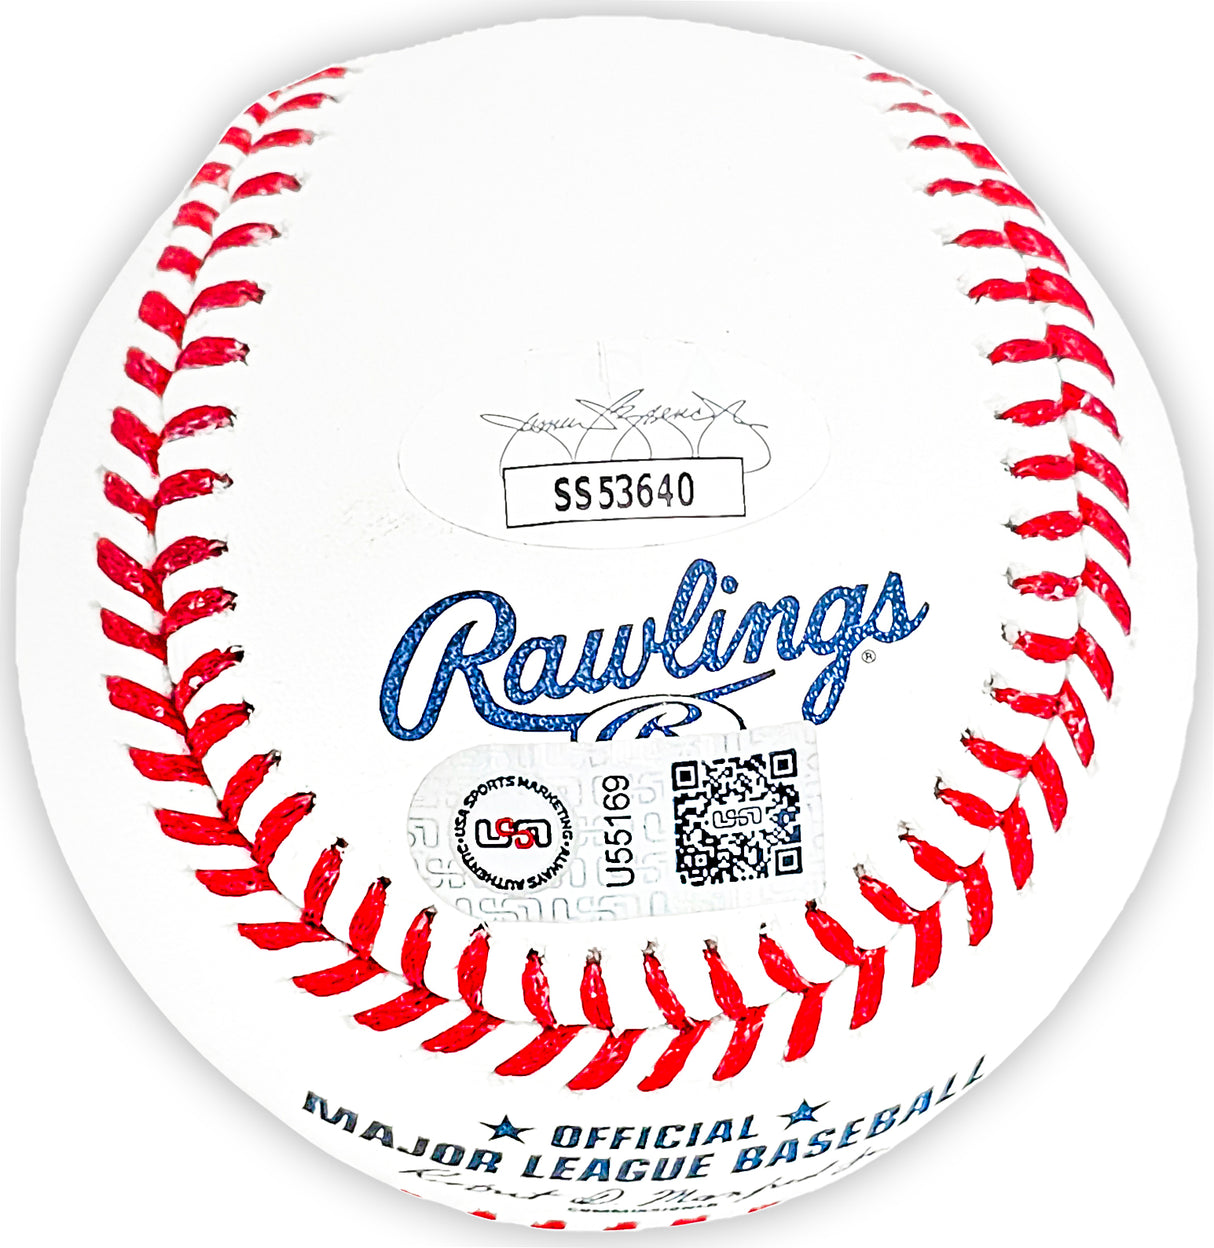 Adrian Beltre Autographed Official Retirement Logo MLB Baseball Texas Rangers JSA Stock #215521